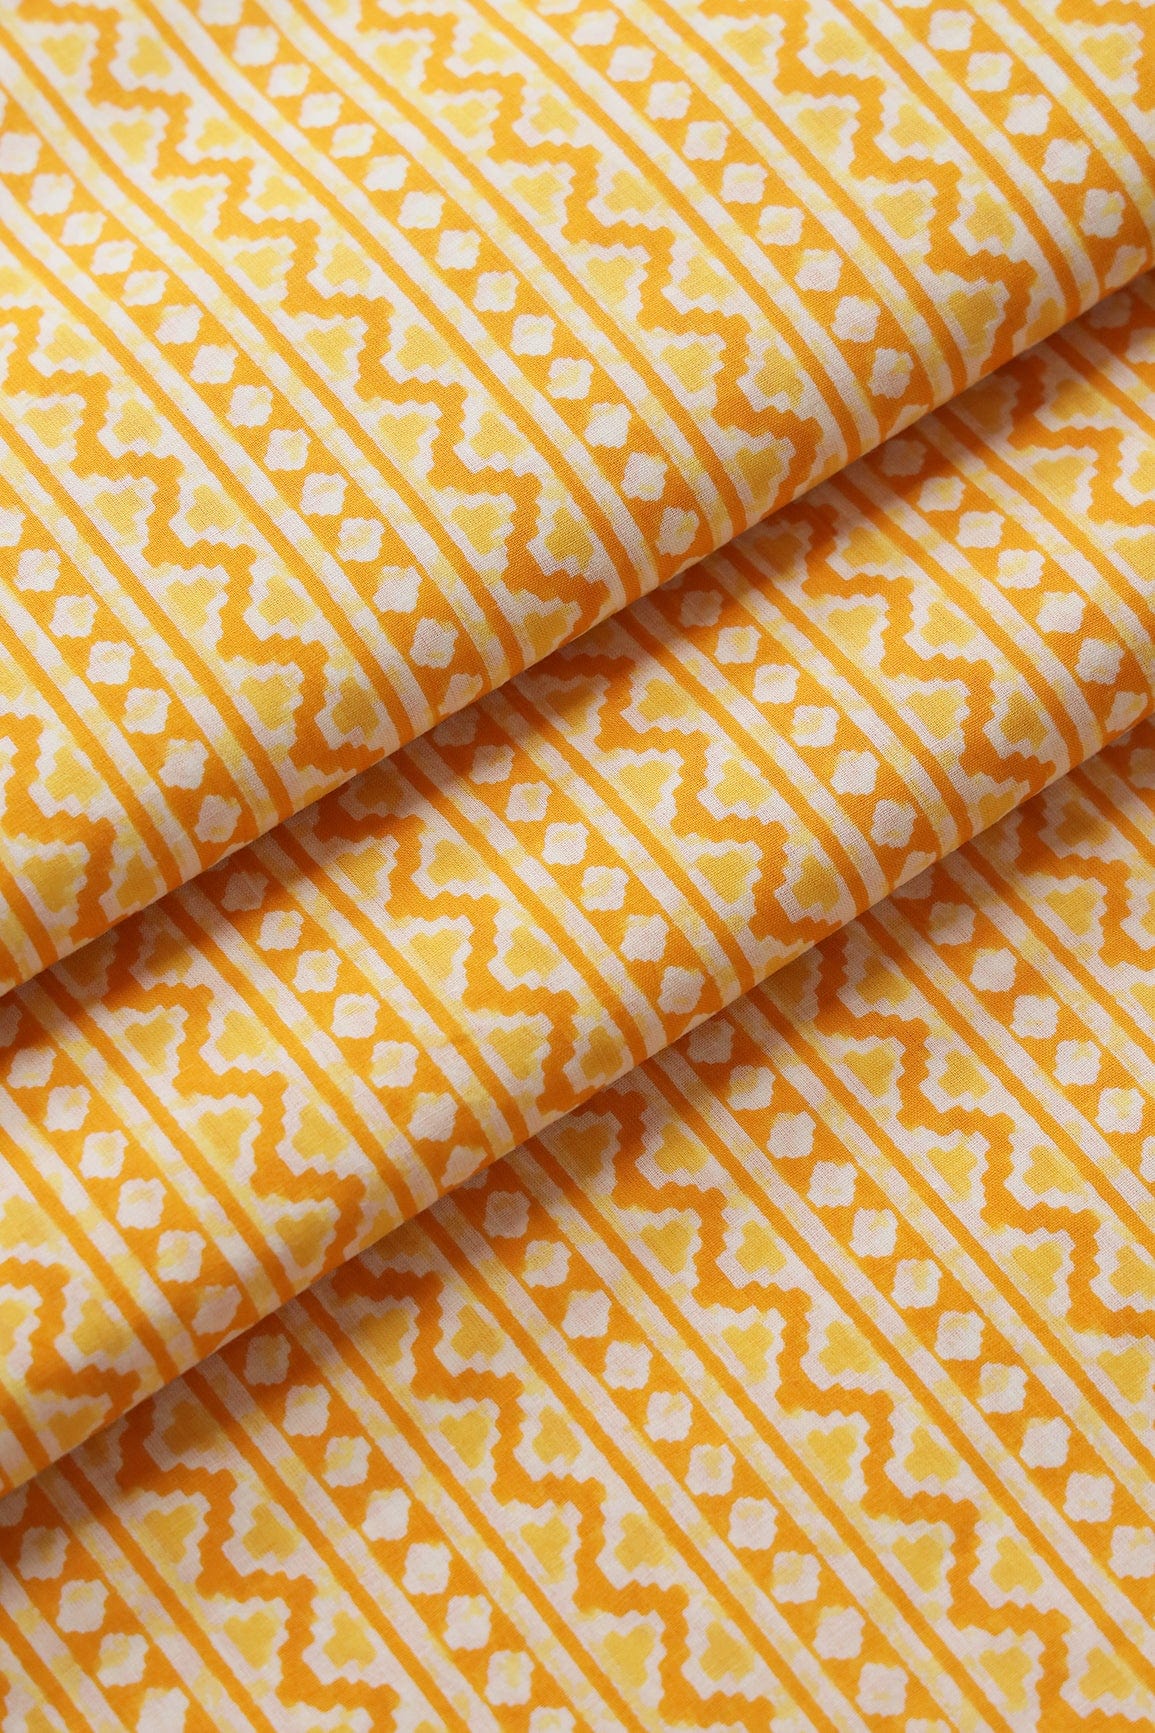 doeraa Prints Yellow And Orange Chevron Print On Pure Mul Cotton Fabric